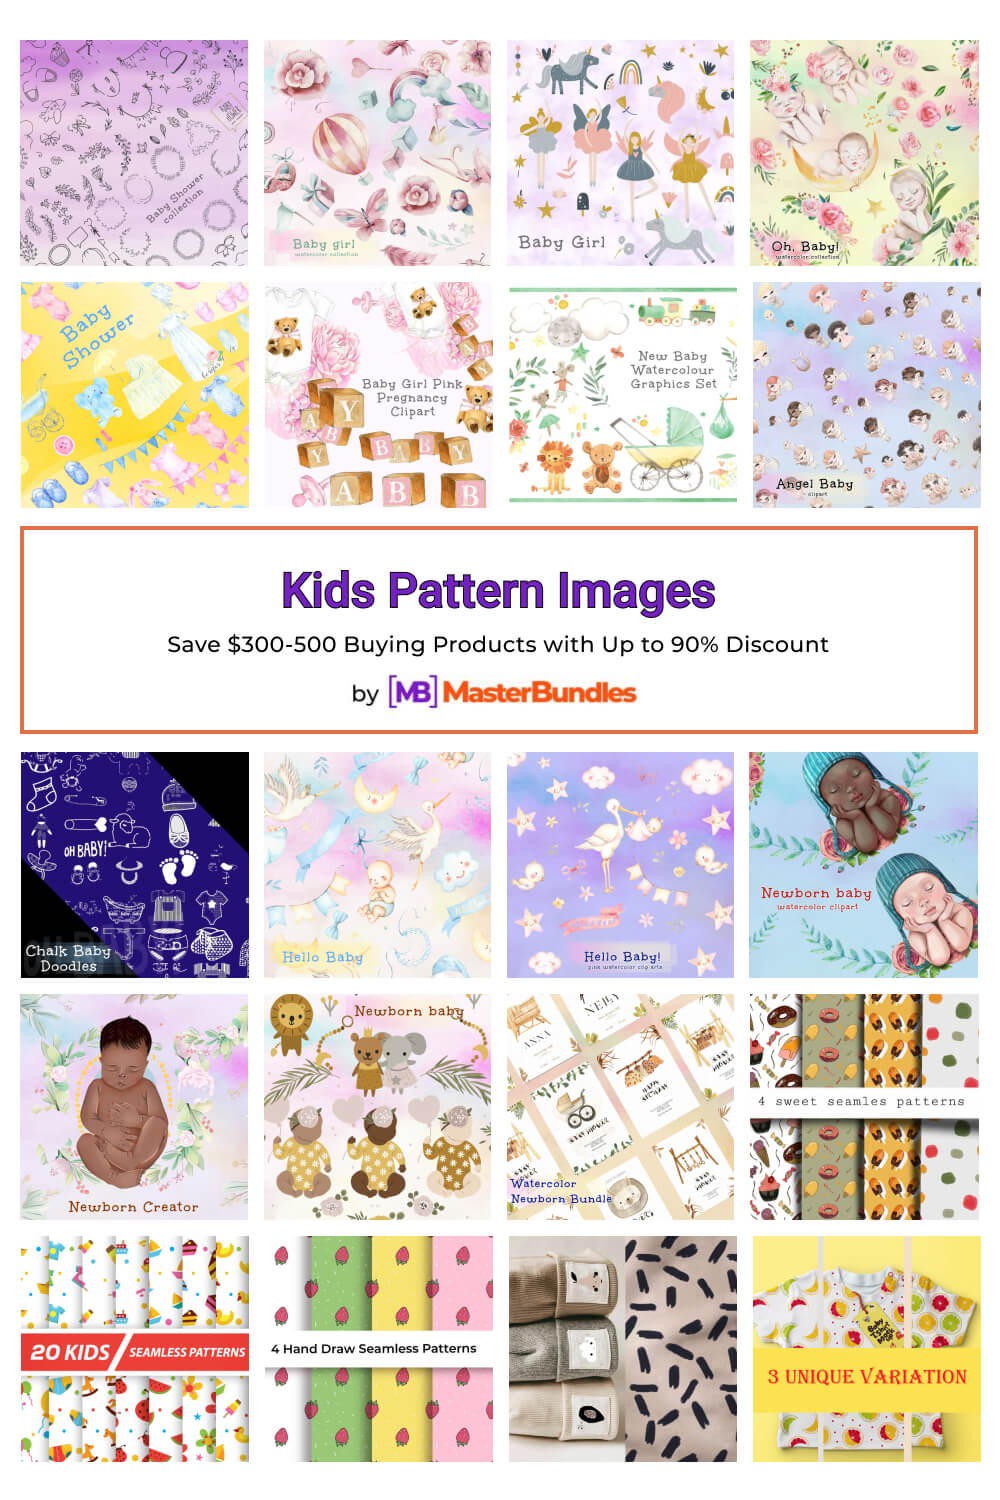 kids pattern images pinterest image.